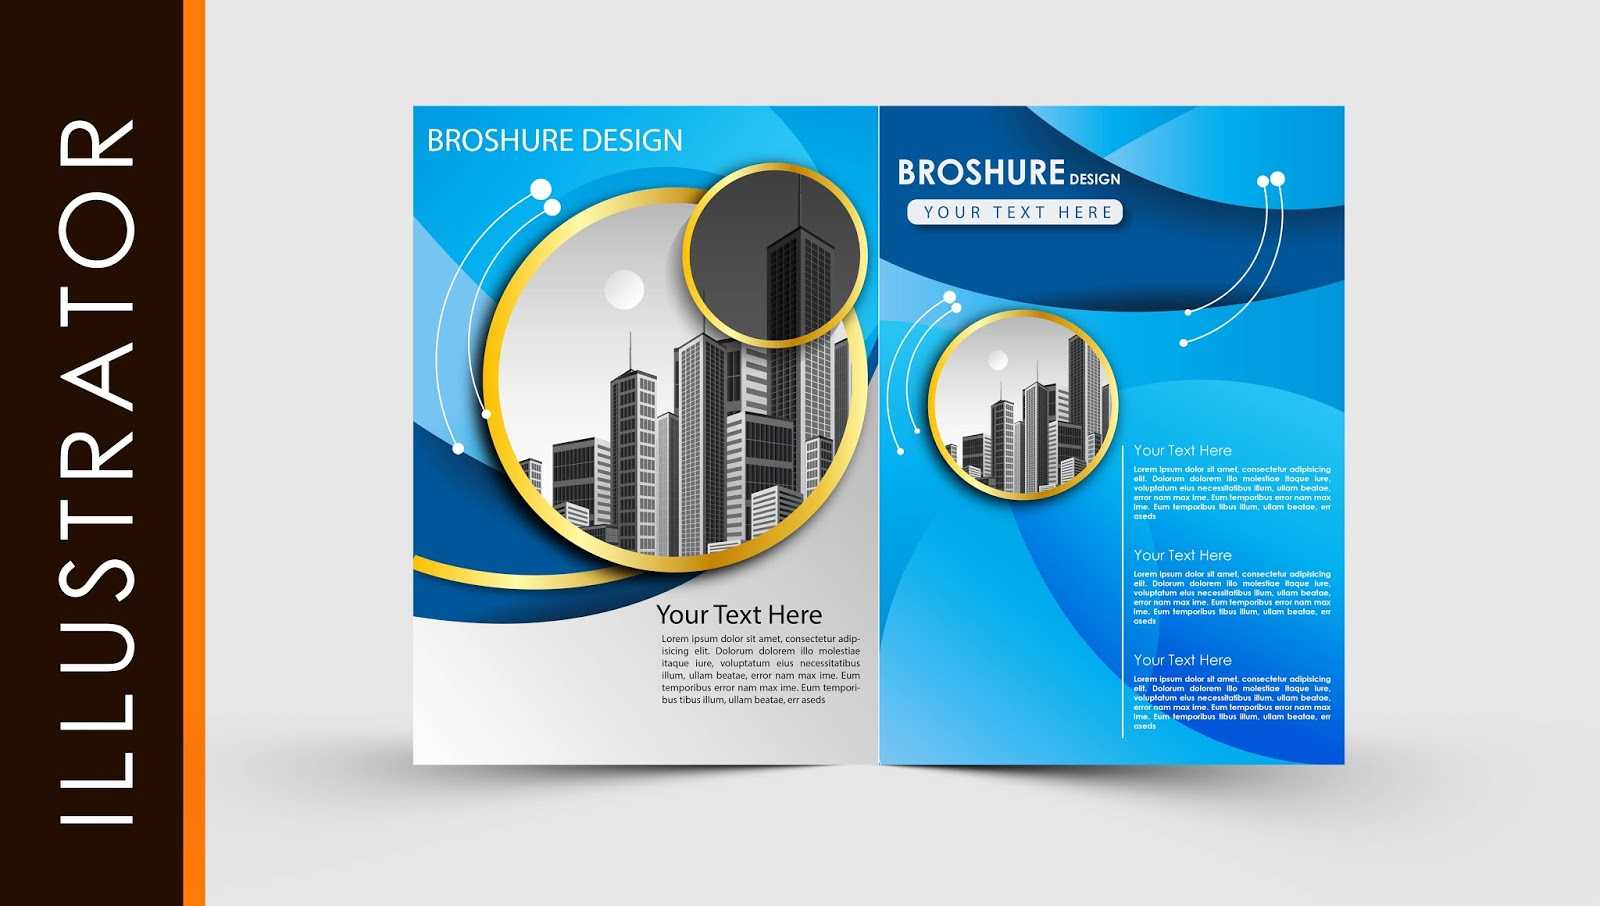 Free Download Adobe Illustrator Template Brochure Two Fold With Regard To Adobe Illustrator Brochure Templates Free Download